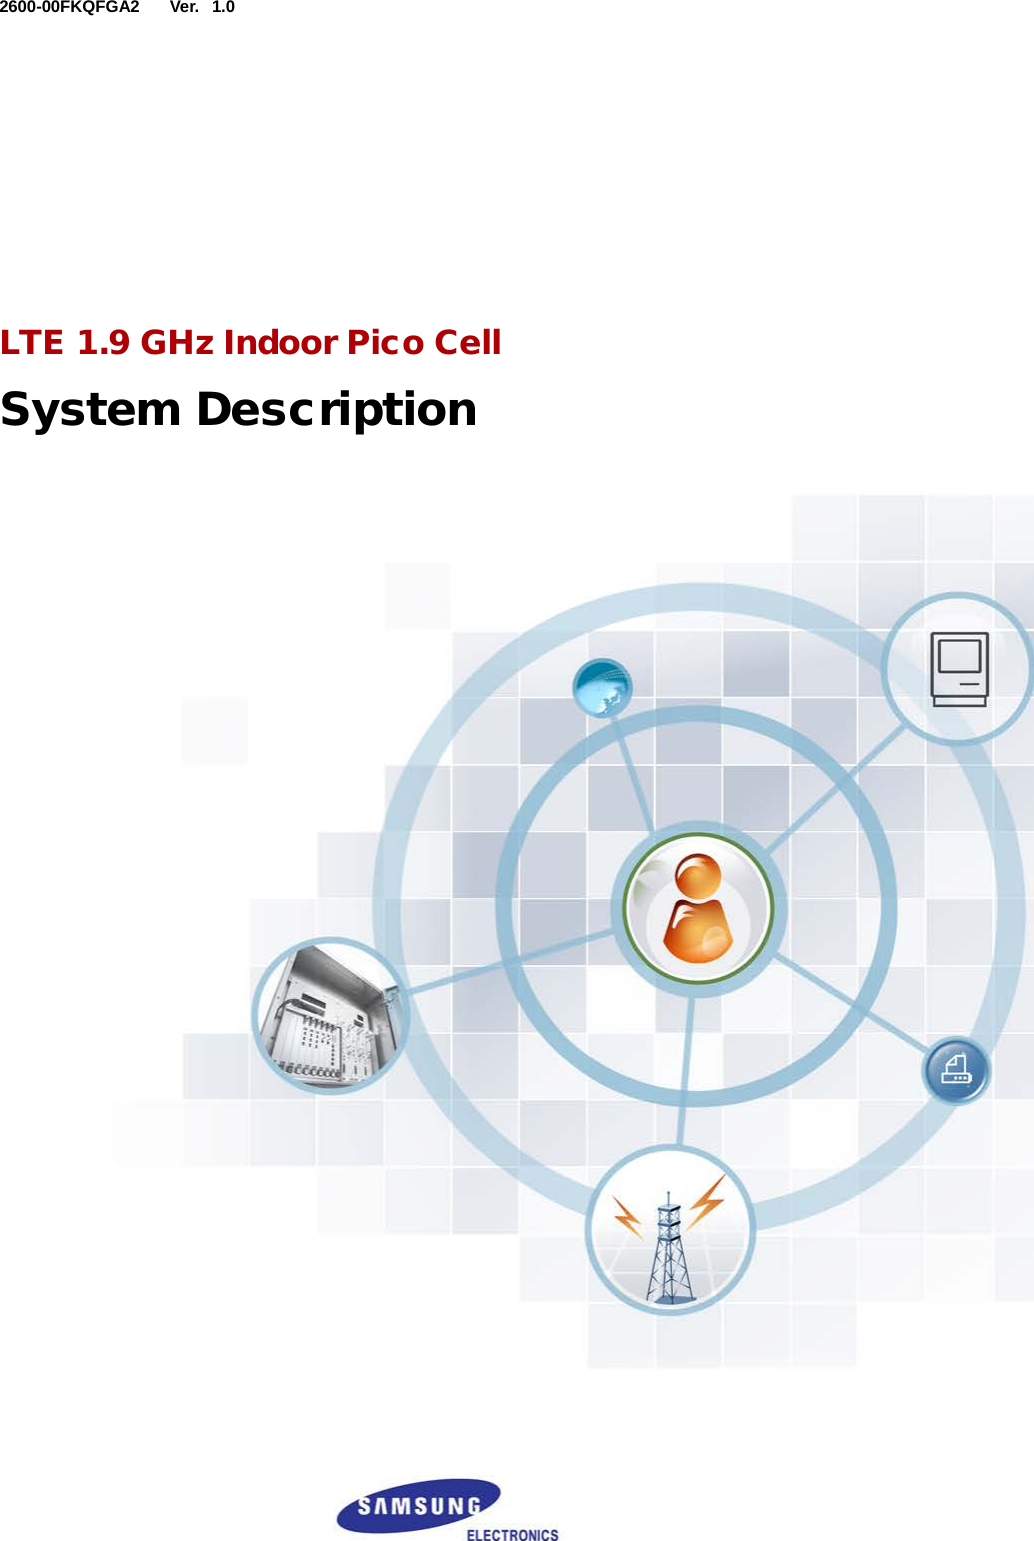  Ver.   2600-00FKQFGA2 1.0        LTE 1.9 GHz Indoor Pico Cell System Description     